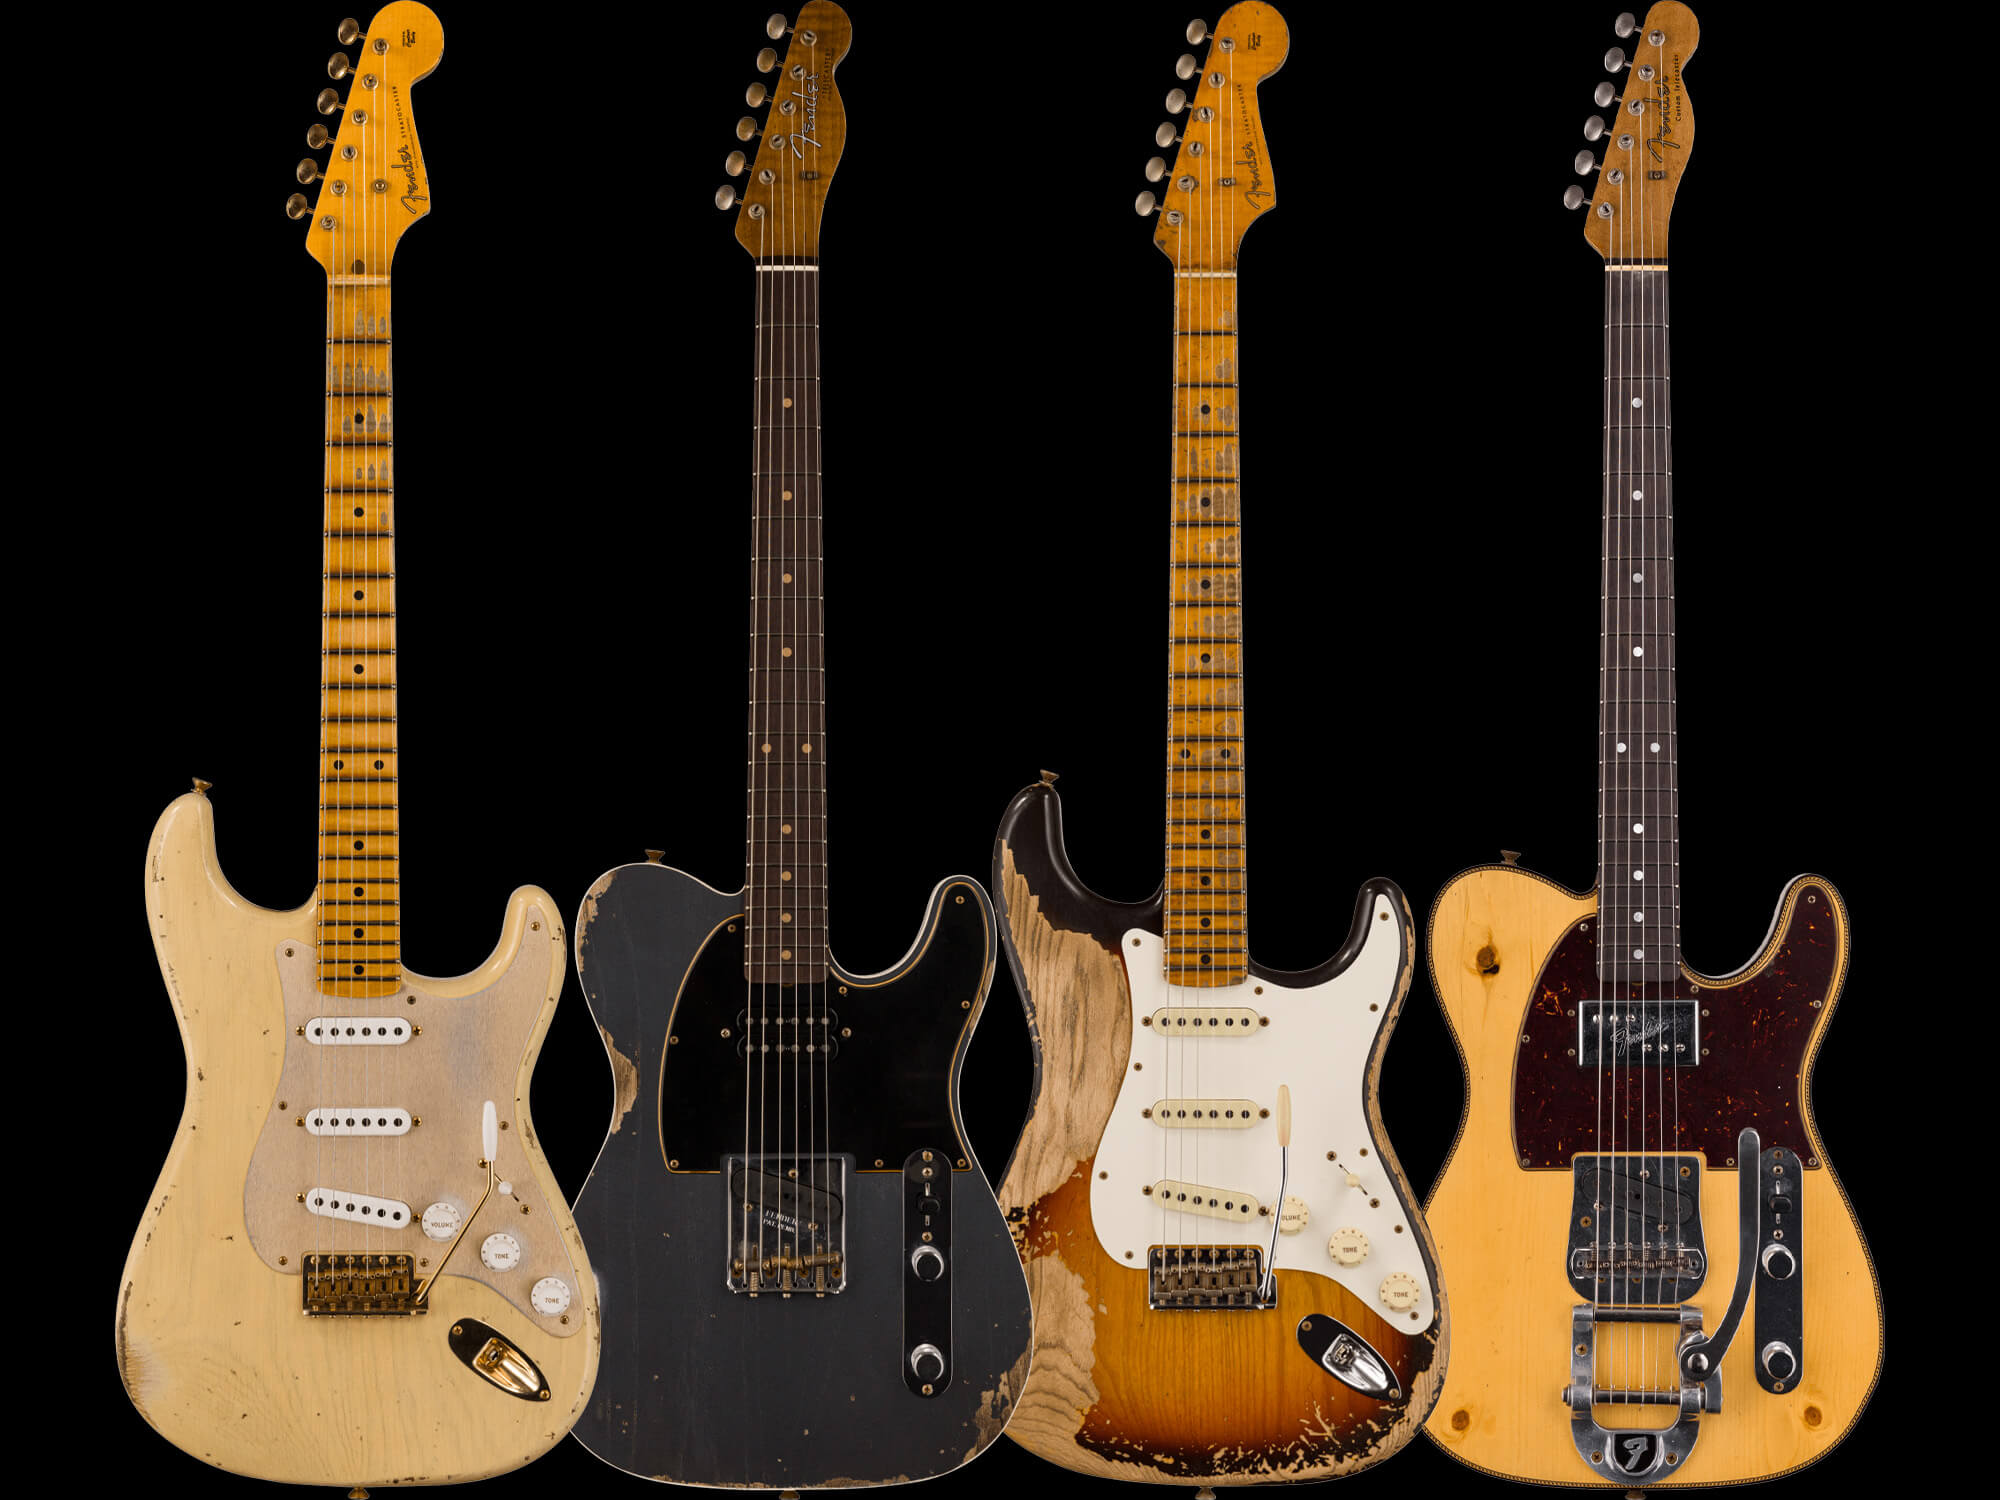 Fender Custom Shop Annual Limited Edition guitars